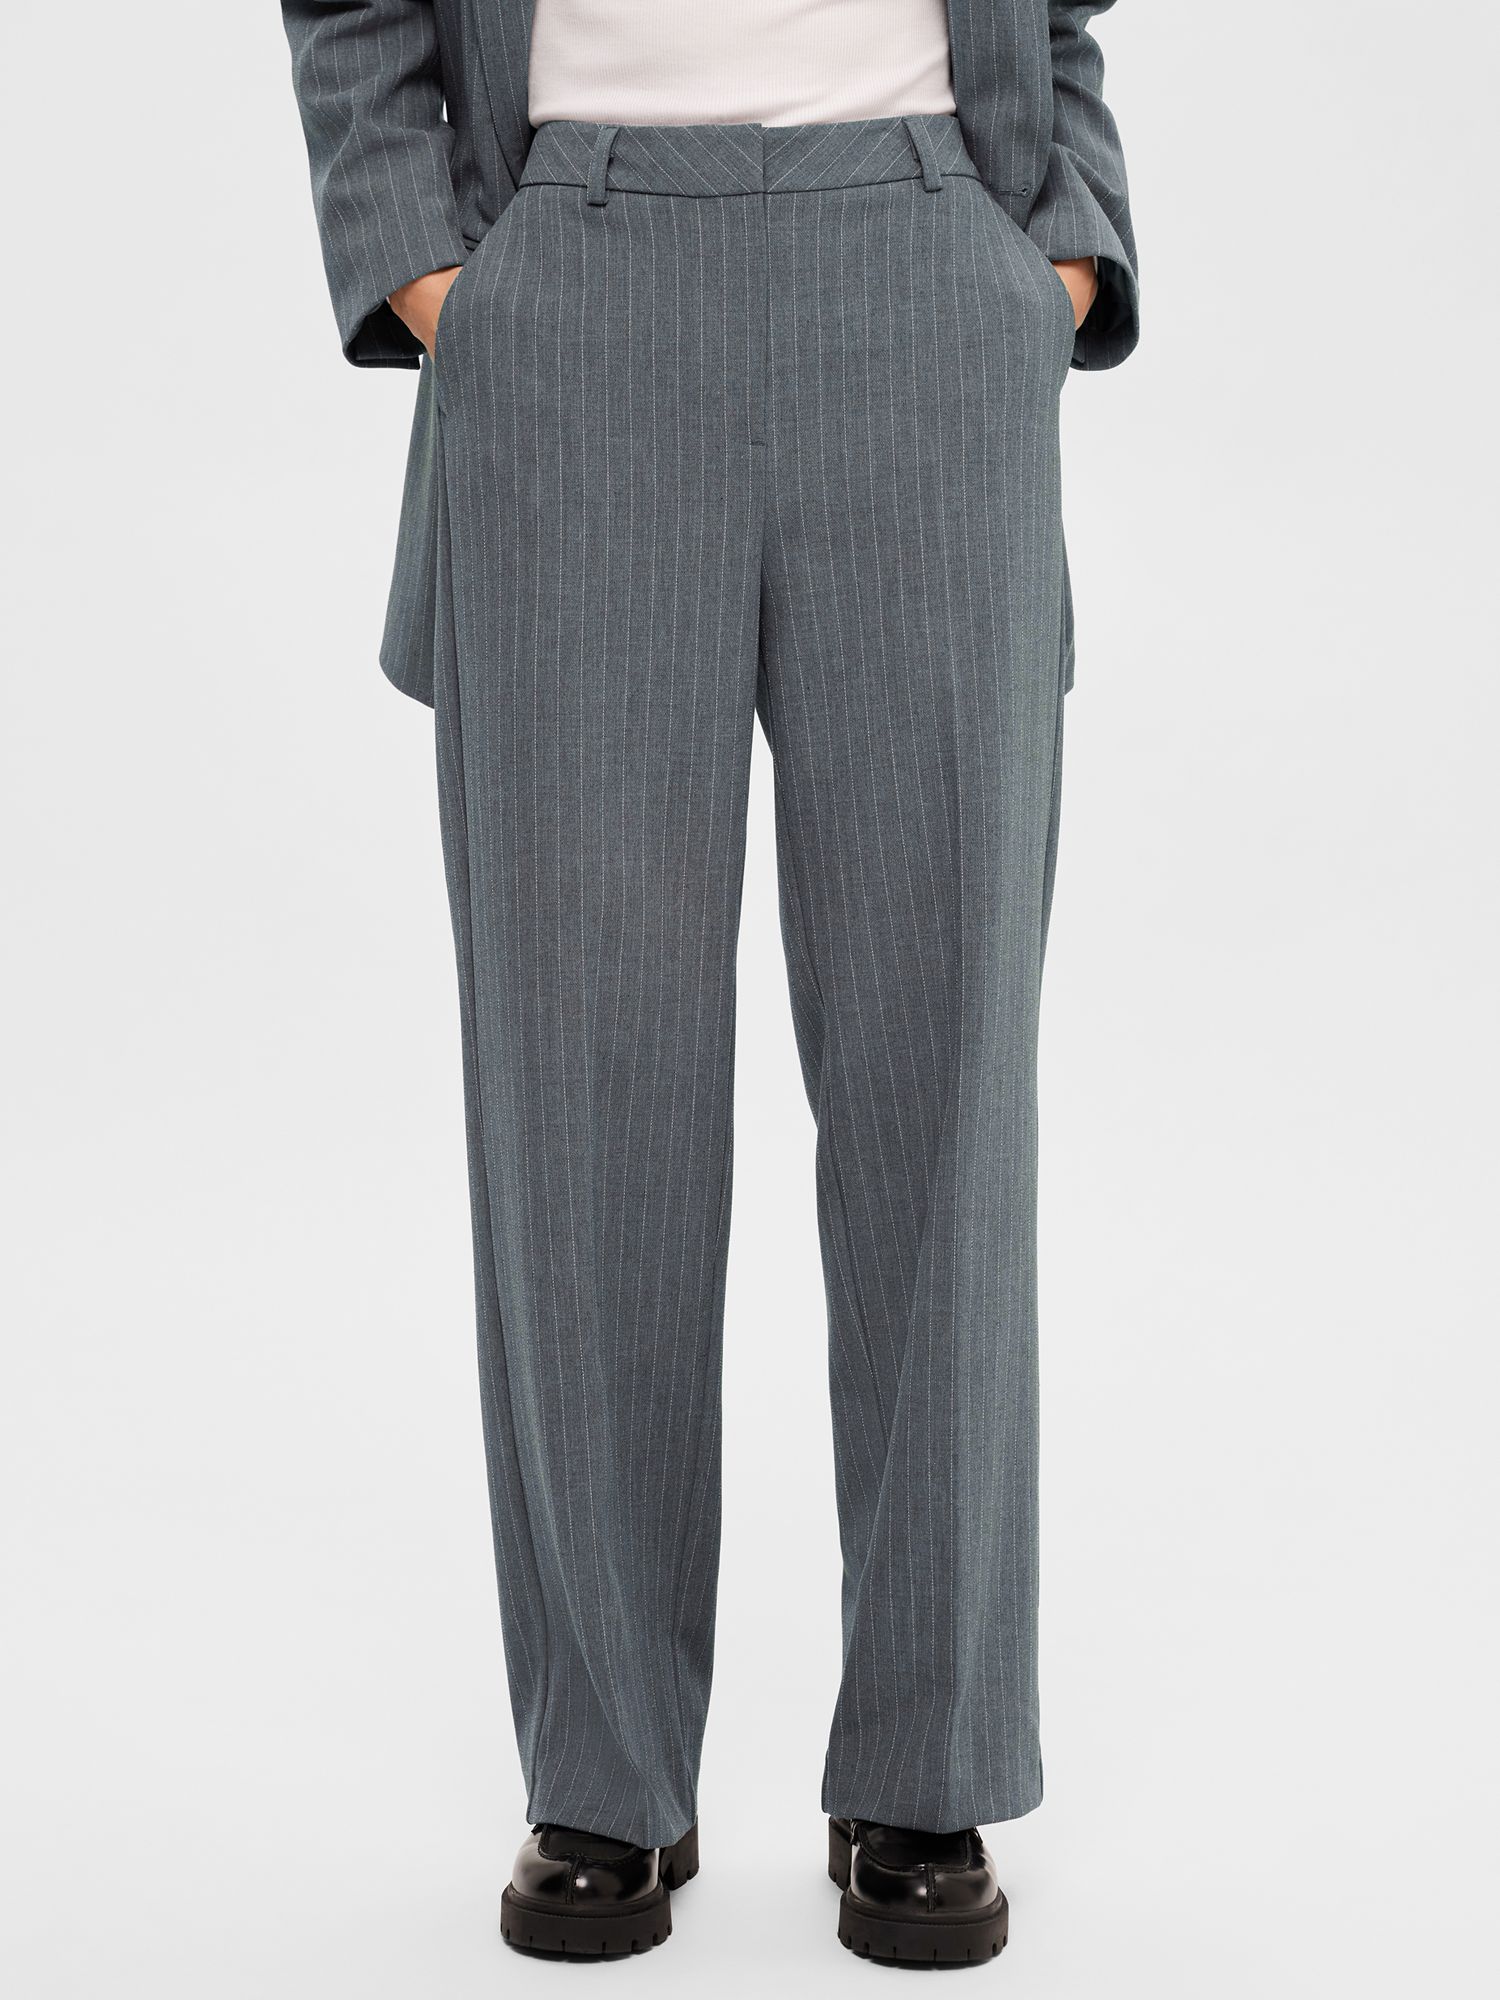 SELECTED FEMME Pinstripe Trousers, Grey Melange at John Lewis & Partners